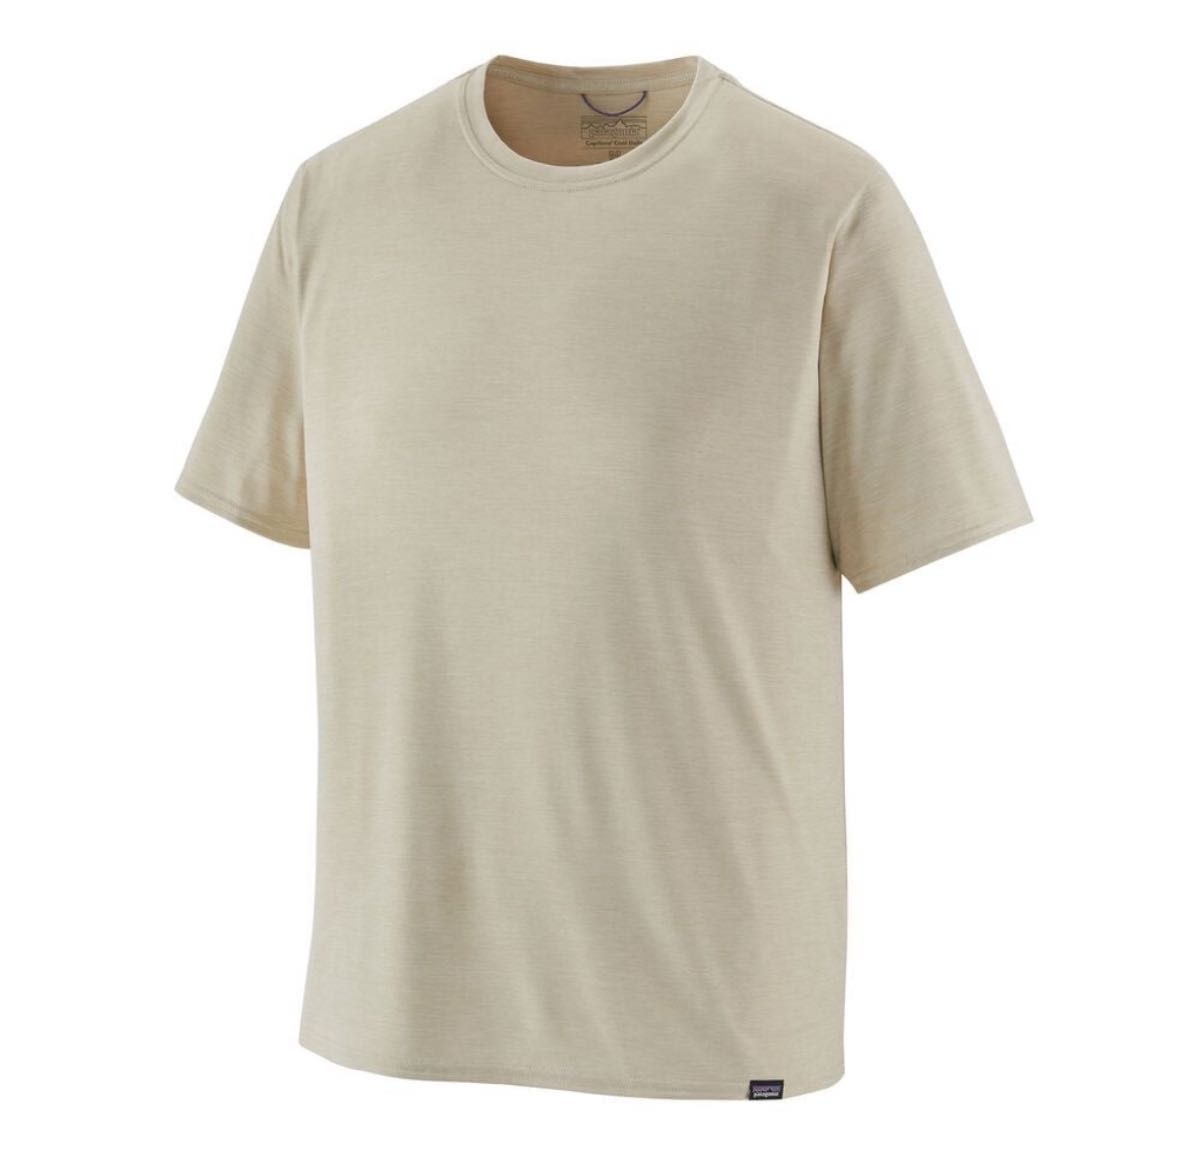 Mサイズ 新品 正規品 Patagonia メンズ キャプリーン クールデイリーシャツ PDYX 速乾 防臭 アンダーシャツ 半袖